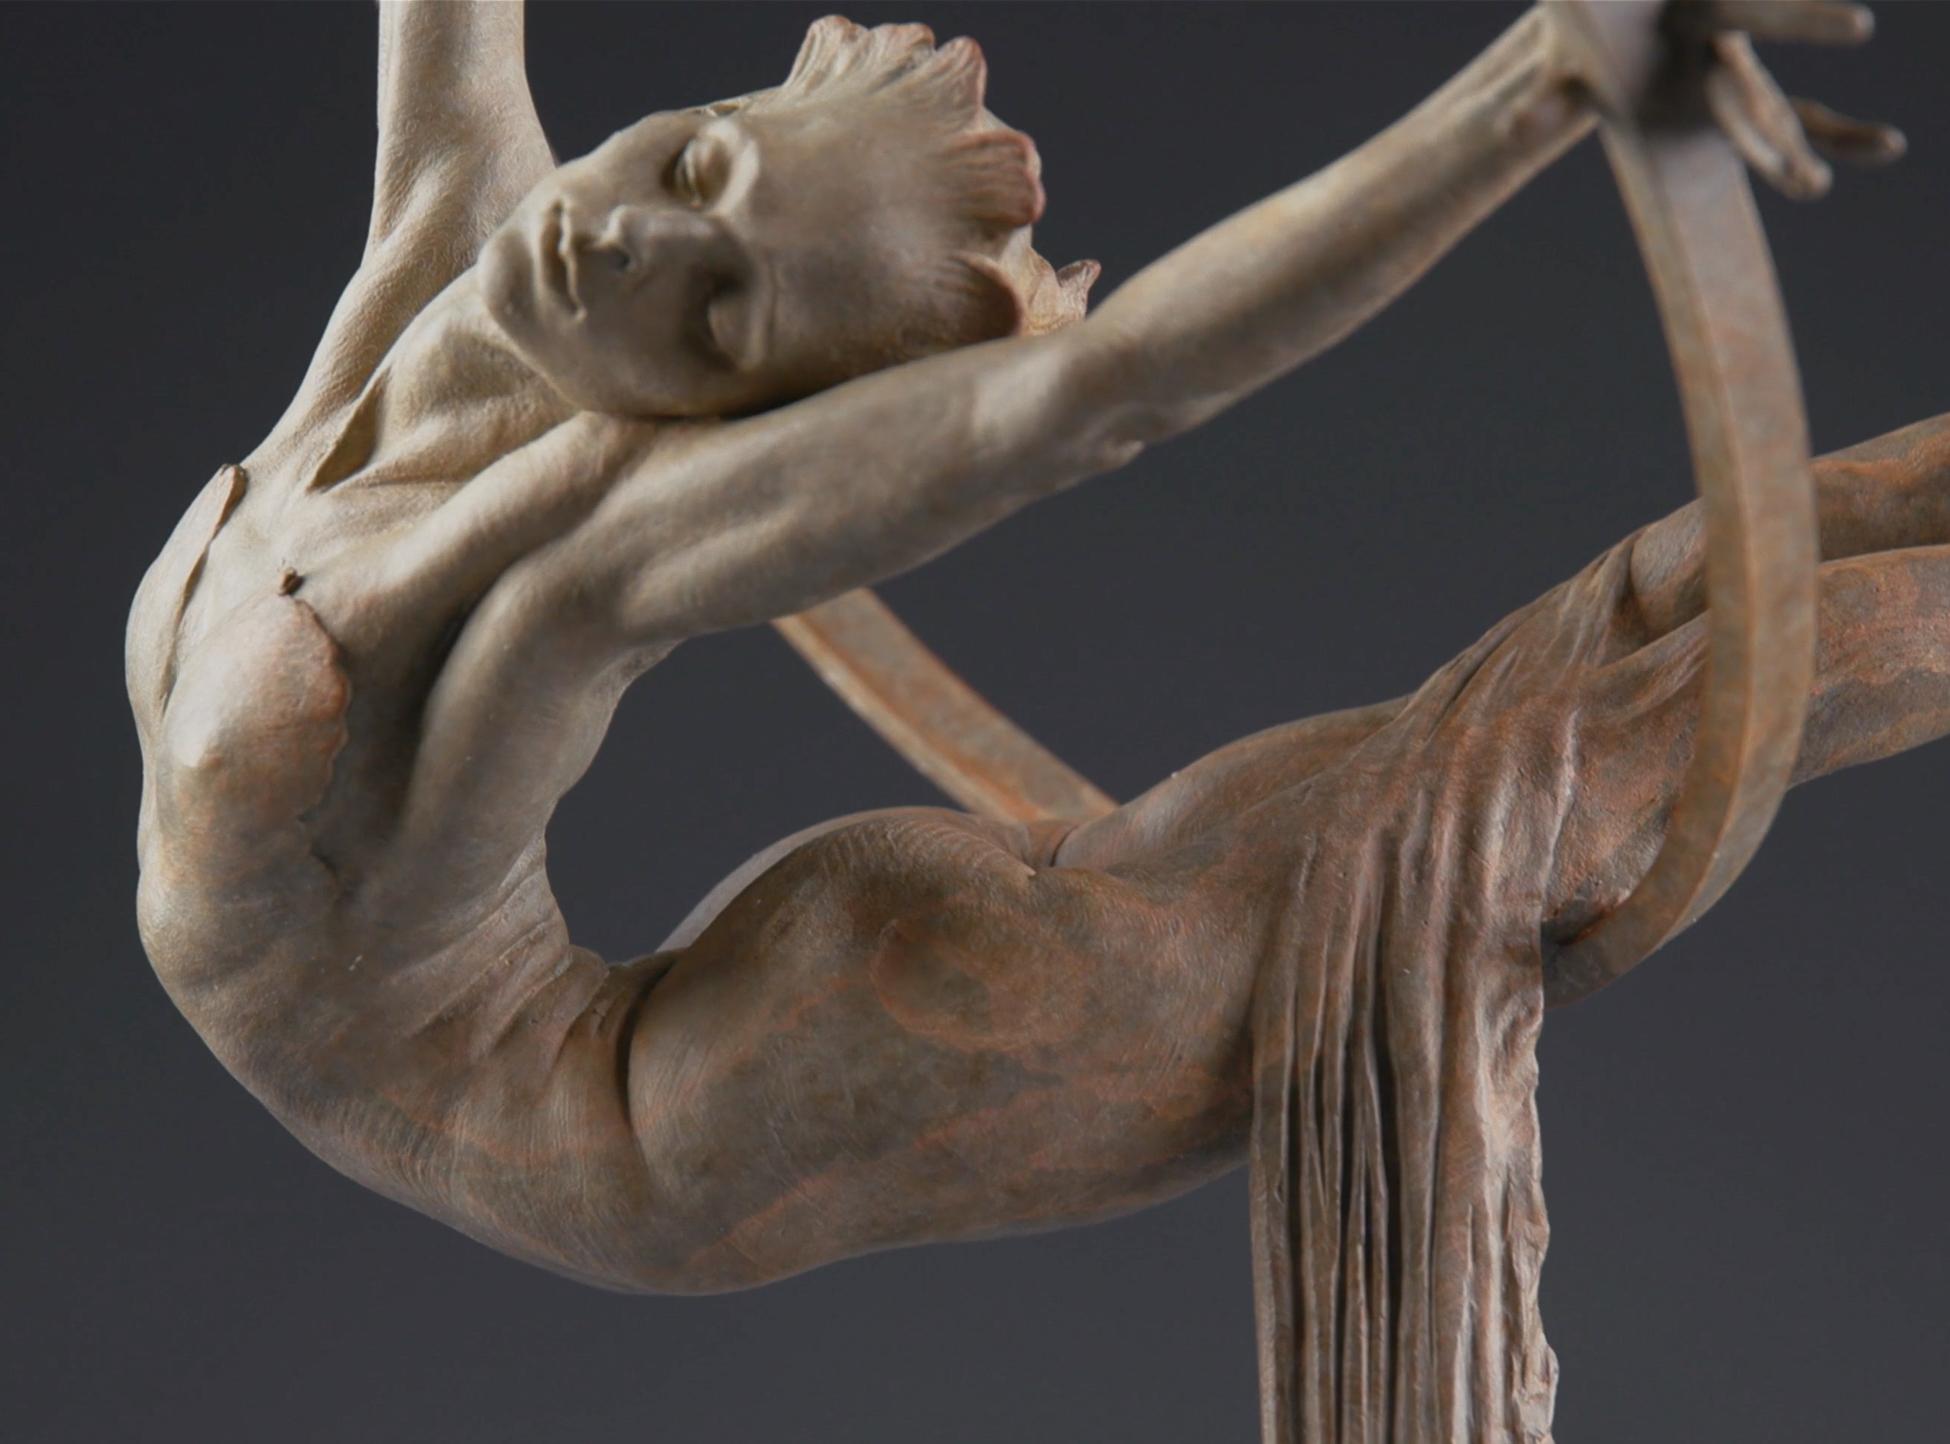 Elena, Atelier - Sculpture de Richard MacDonald